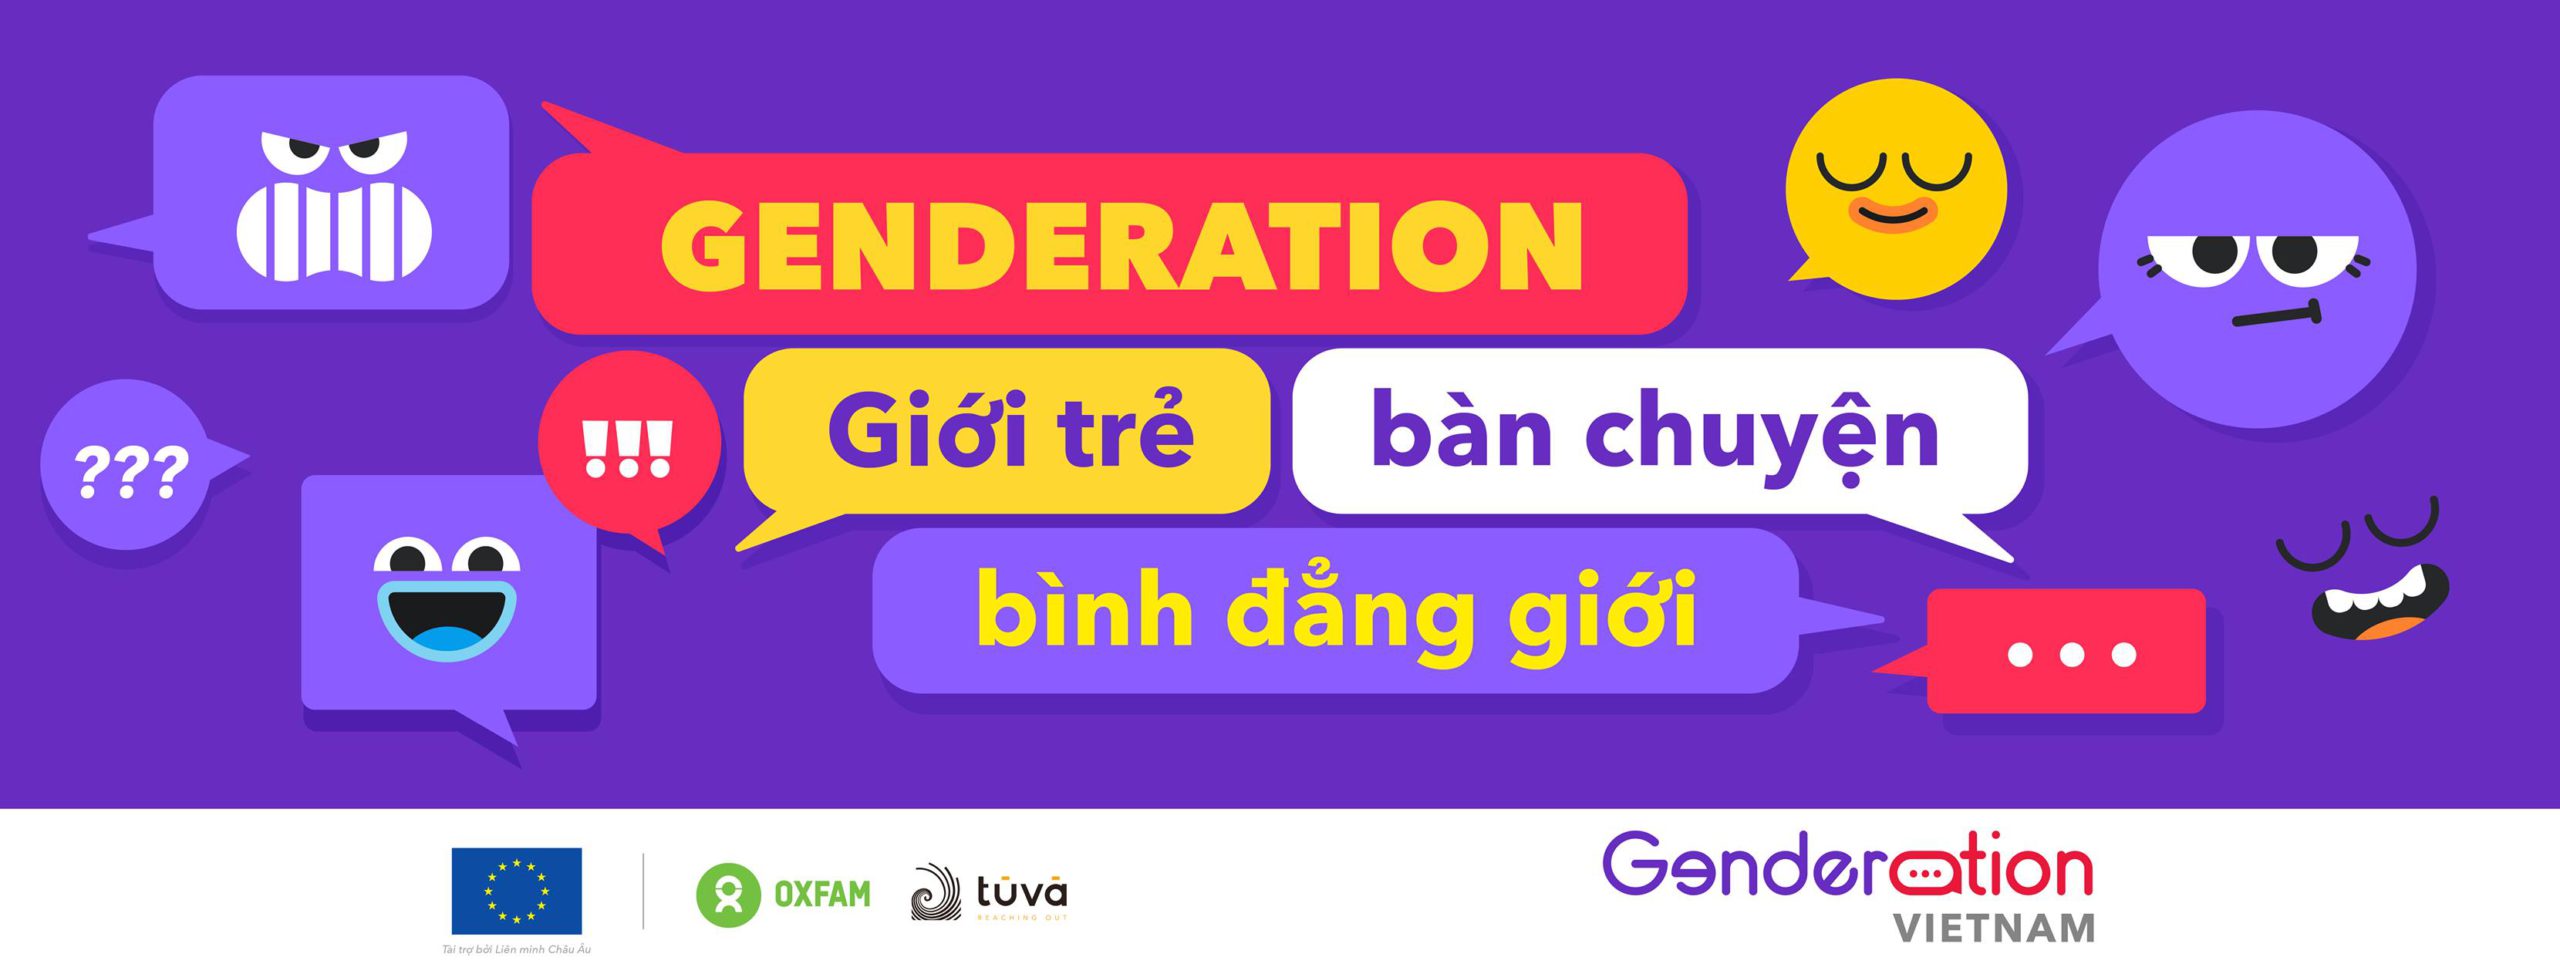 TUVA Communication - Genderation Vietnam